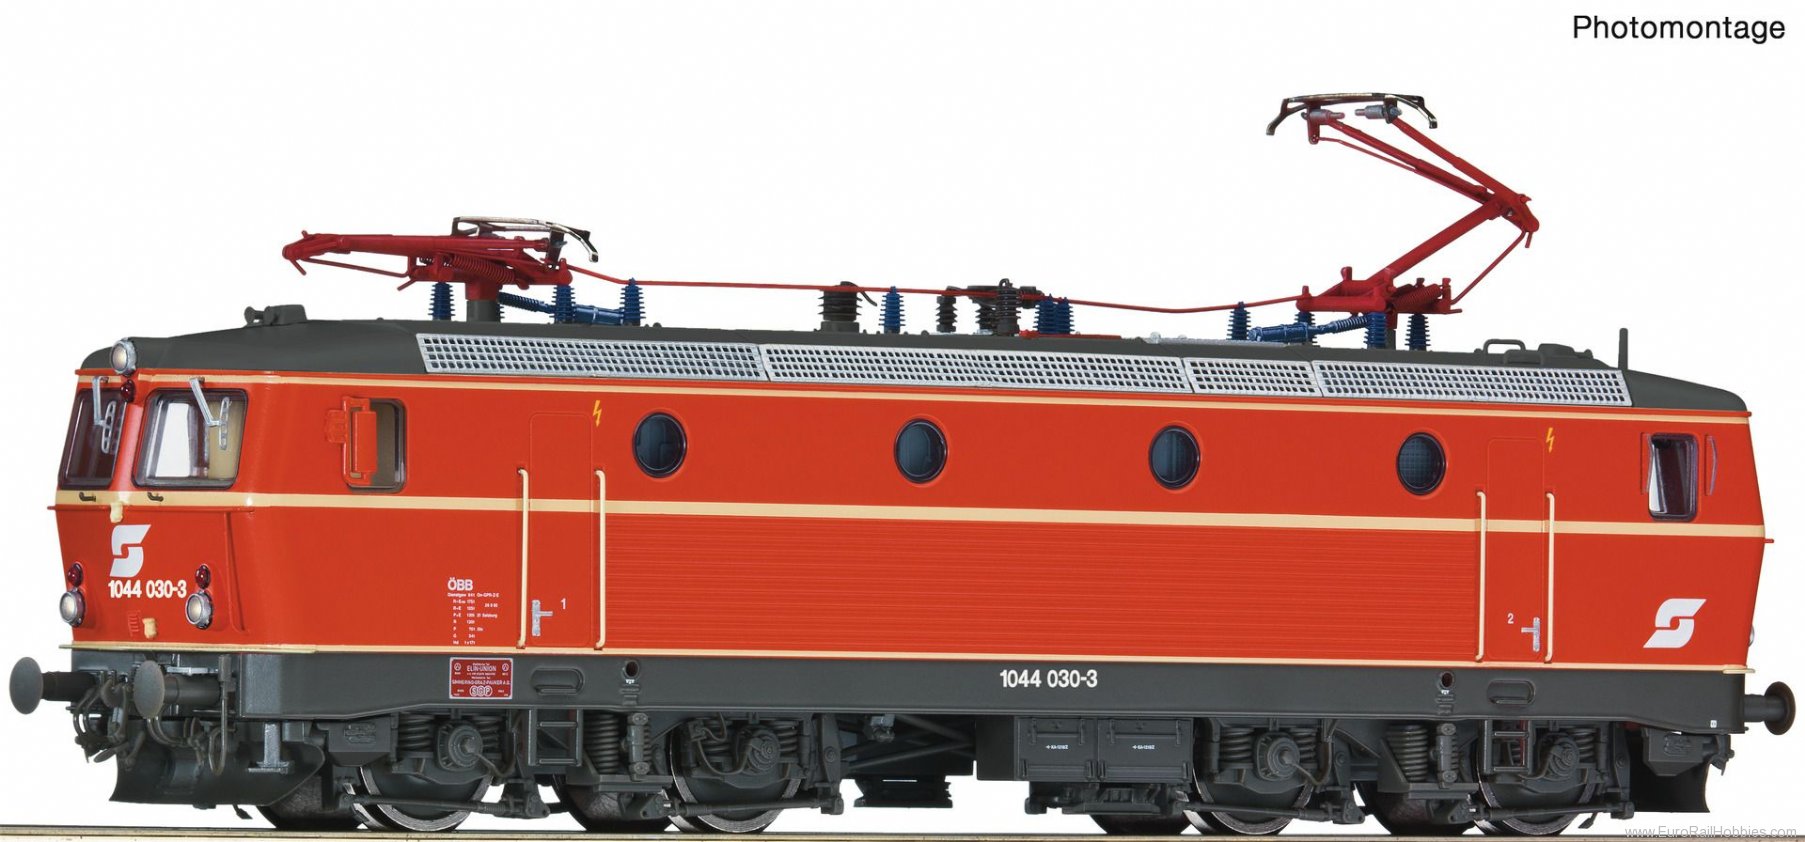 Roco 70431 OBB Electric locomotive 1044 030-3,